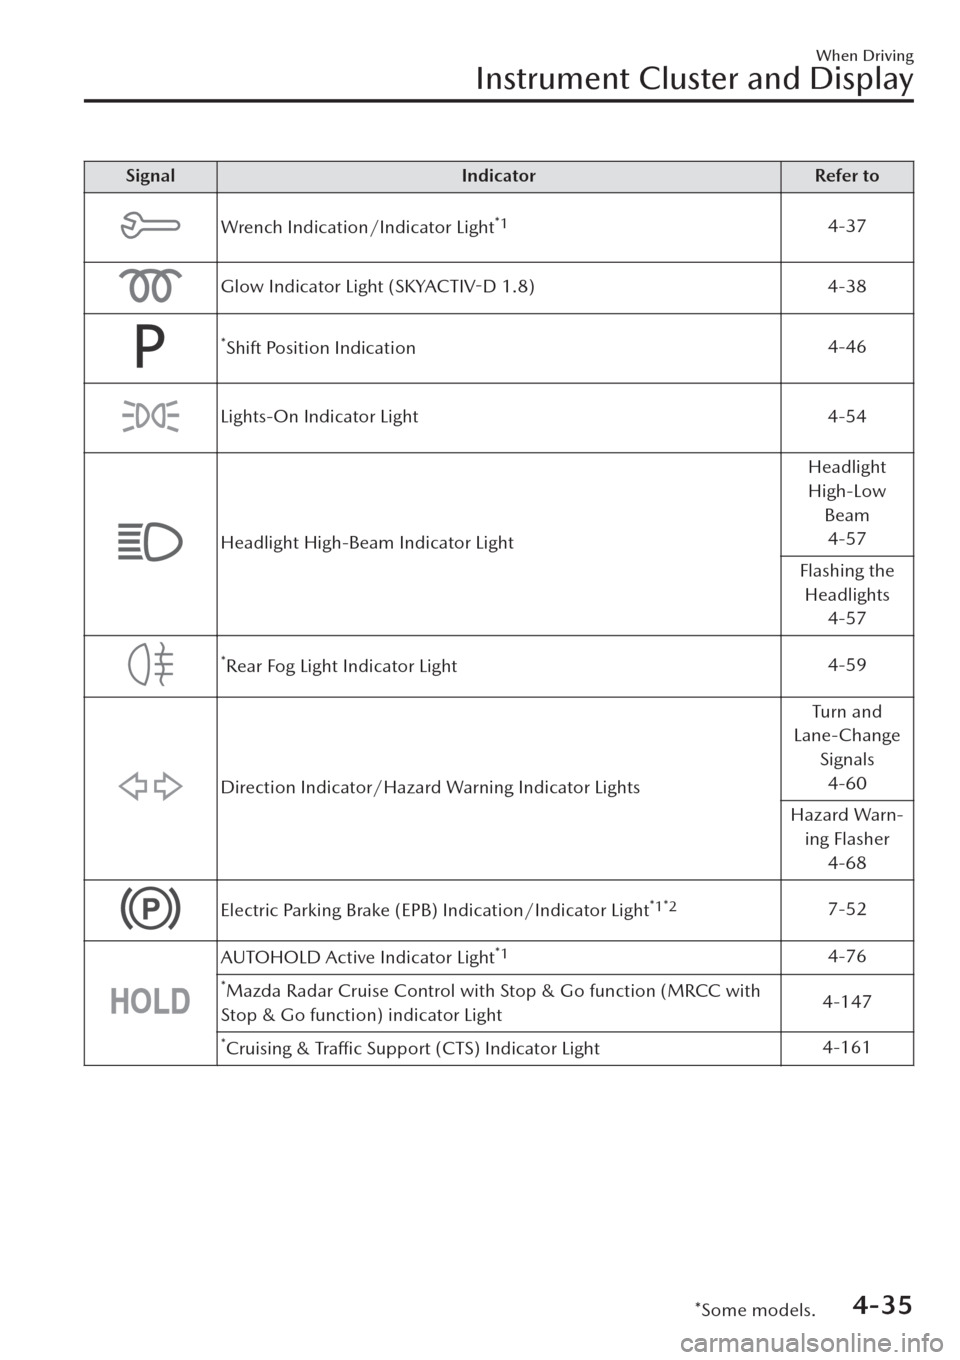 MAZDA MODEL CX-30 2019  Owners Manual (in English) Signal Indicator Refer to
Wrench Indication/Indicator Light*14-37
Glow Indicator Light 
(SKYACTIV-D 1.8) 4-38
*Shift Position Indication4-46
Lights-On Indicator Light 4-54
Headlight High-Beam Indicato